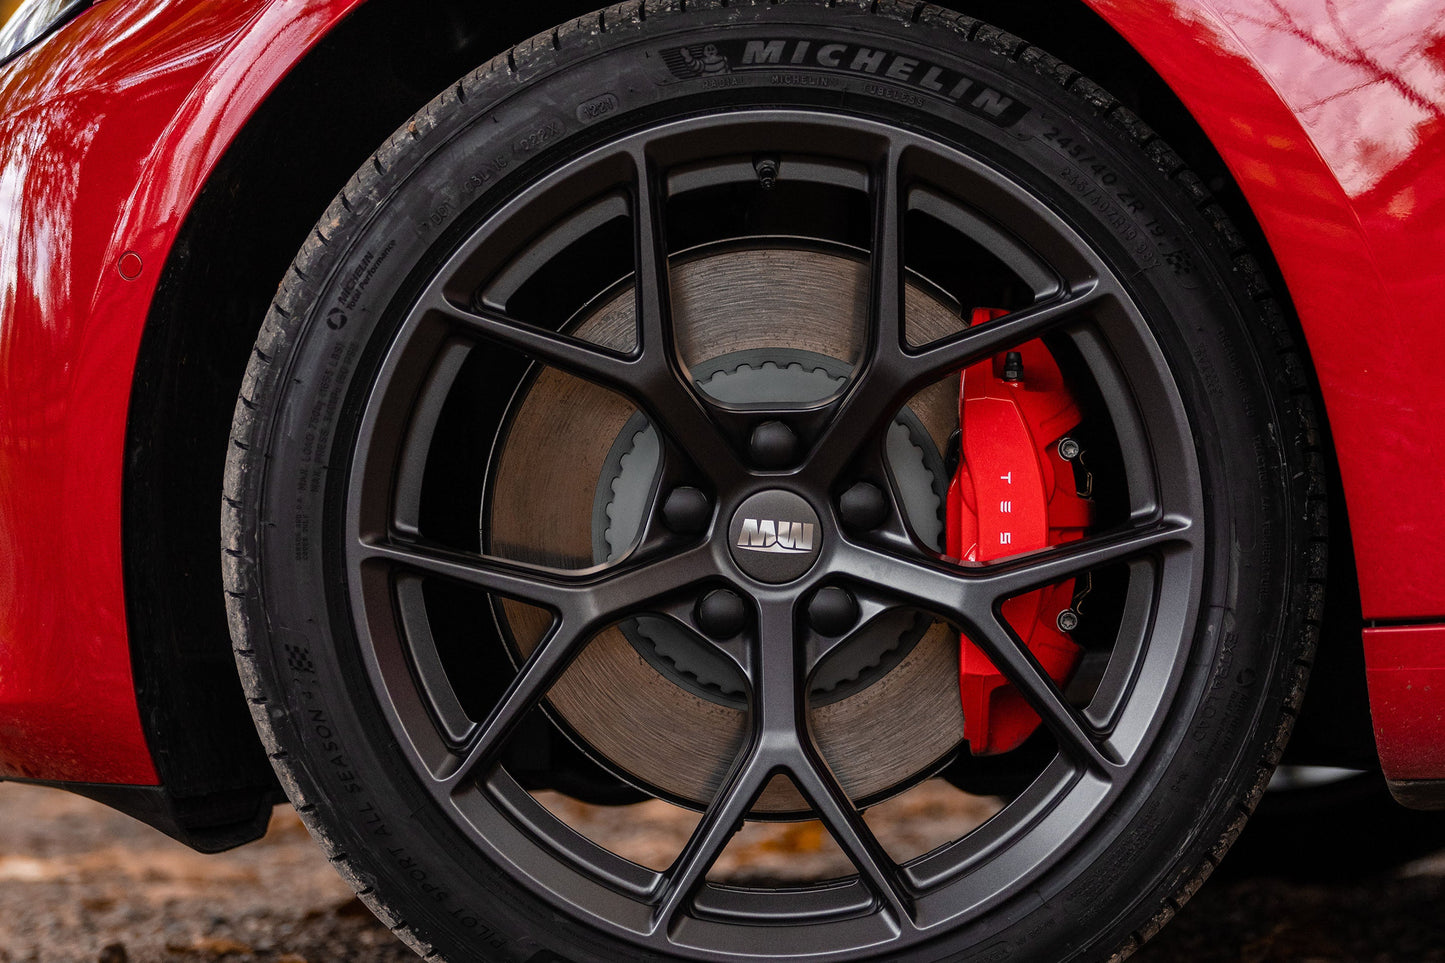 MW05 Forged Wheels For VW ID4/Audi Q4 E Tron